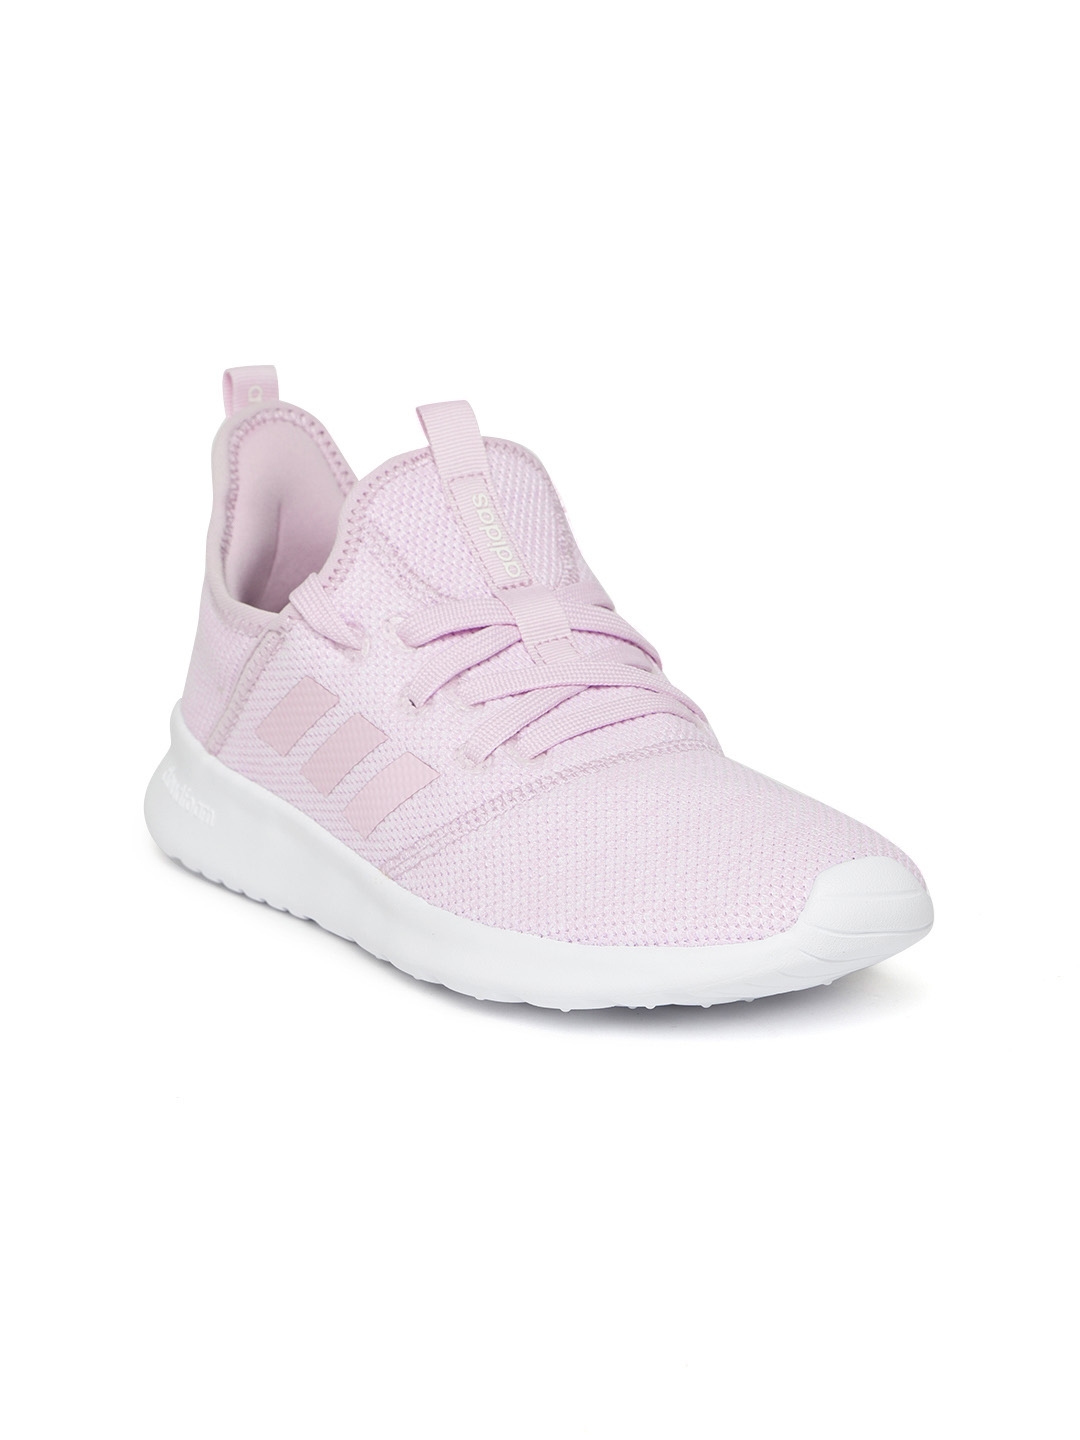 adidas cloudfoam pink shoes